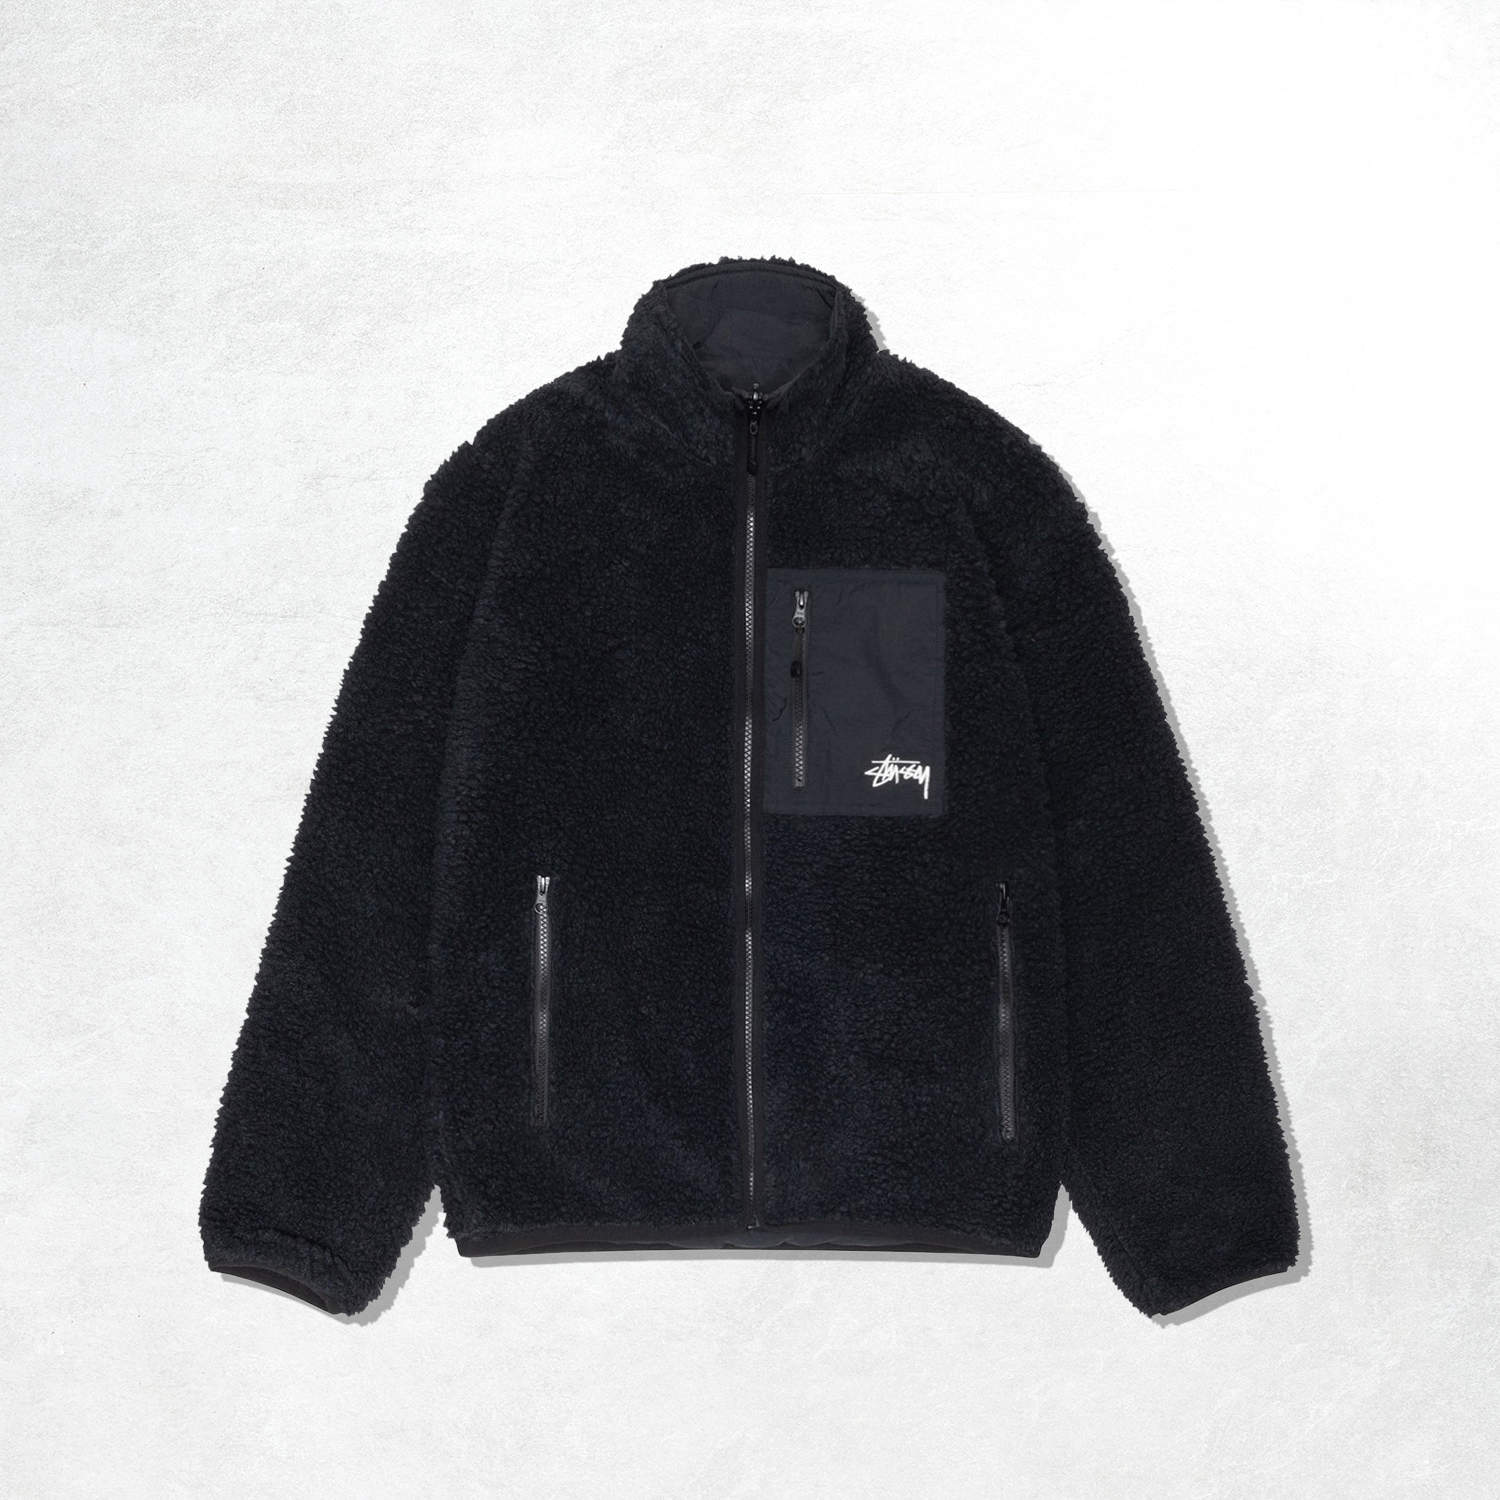 Stussy Sherpa Reversible Jacket: Black